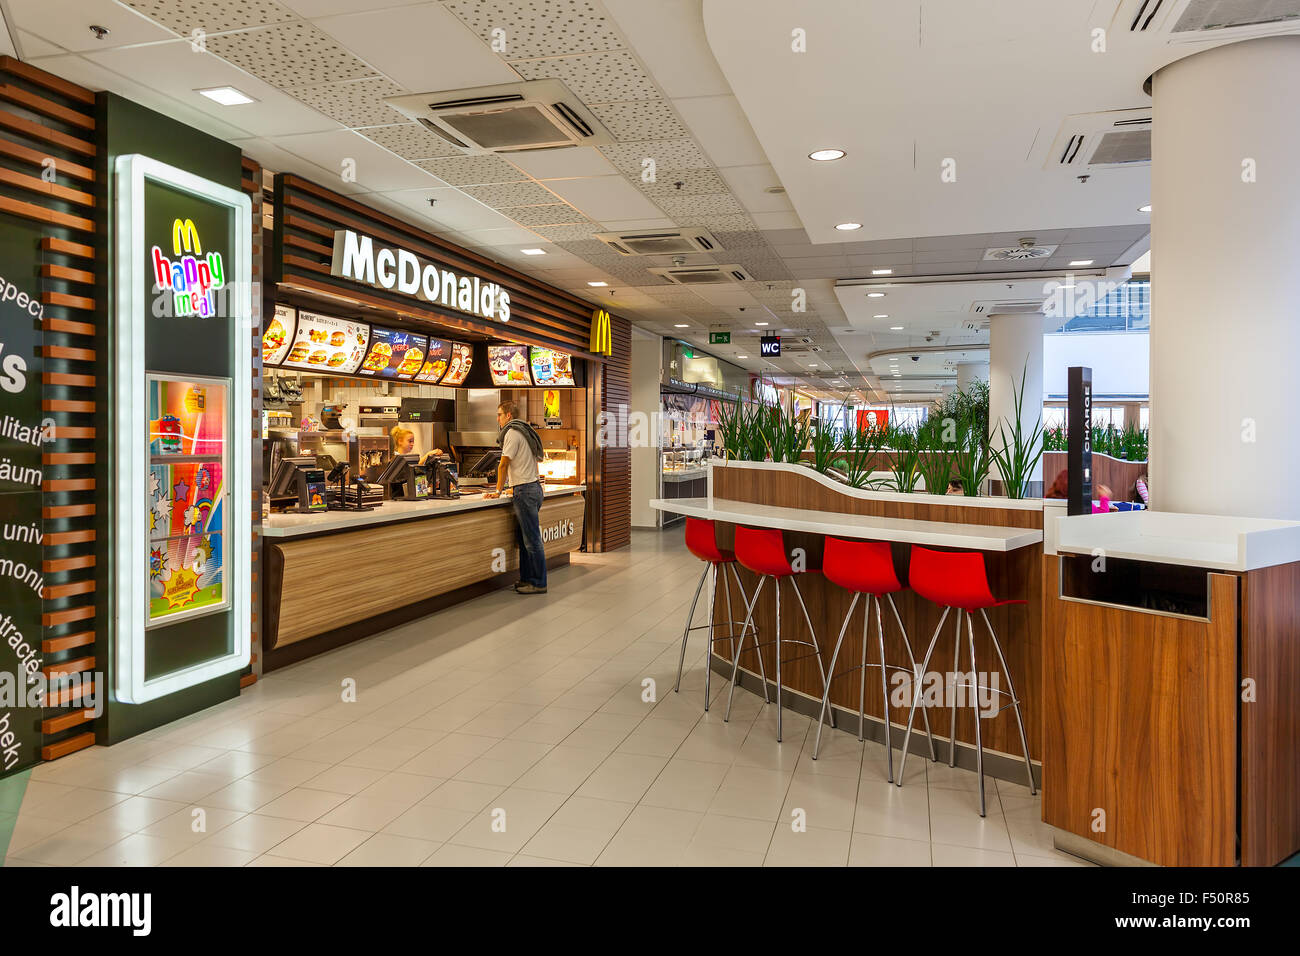 McDonald's-Restaurant im Inneren Flora Handelszentrum in Prag, Tschechien. Stockfoto